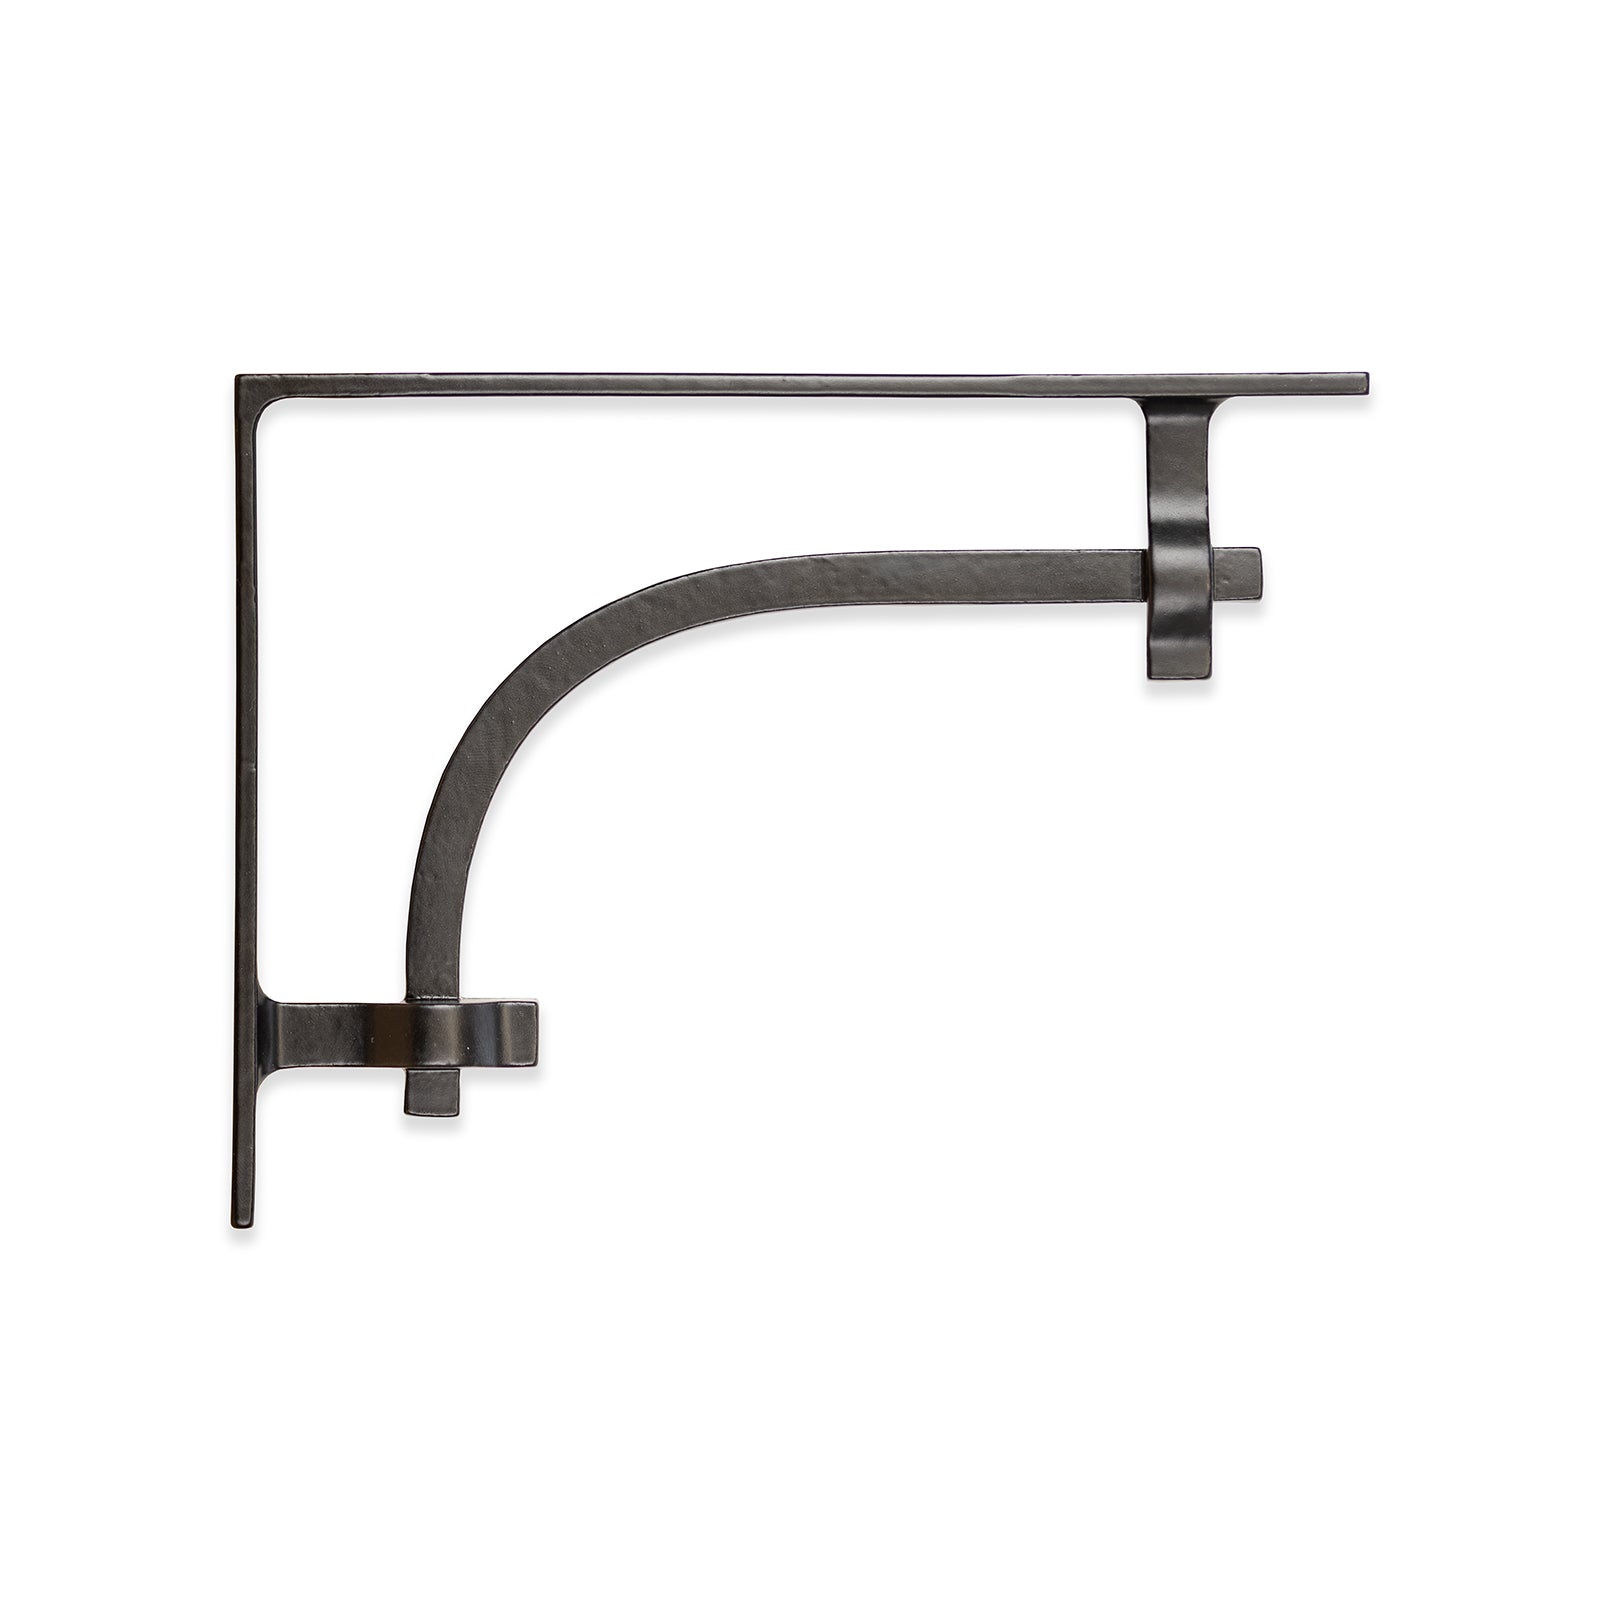 Cast Iron Shelf Bracket Industrial Design - industrial style shelf brackets